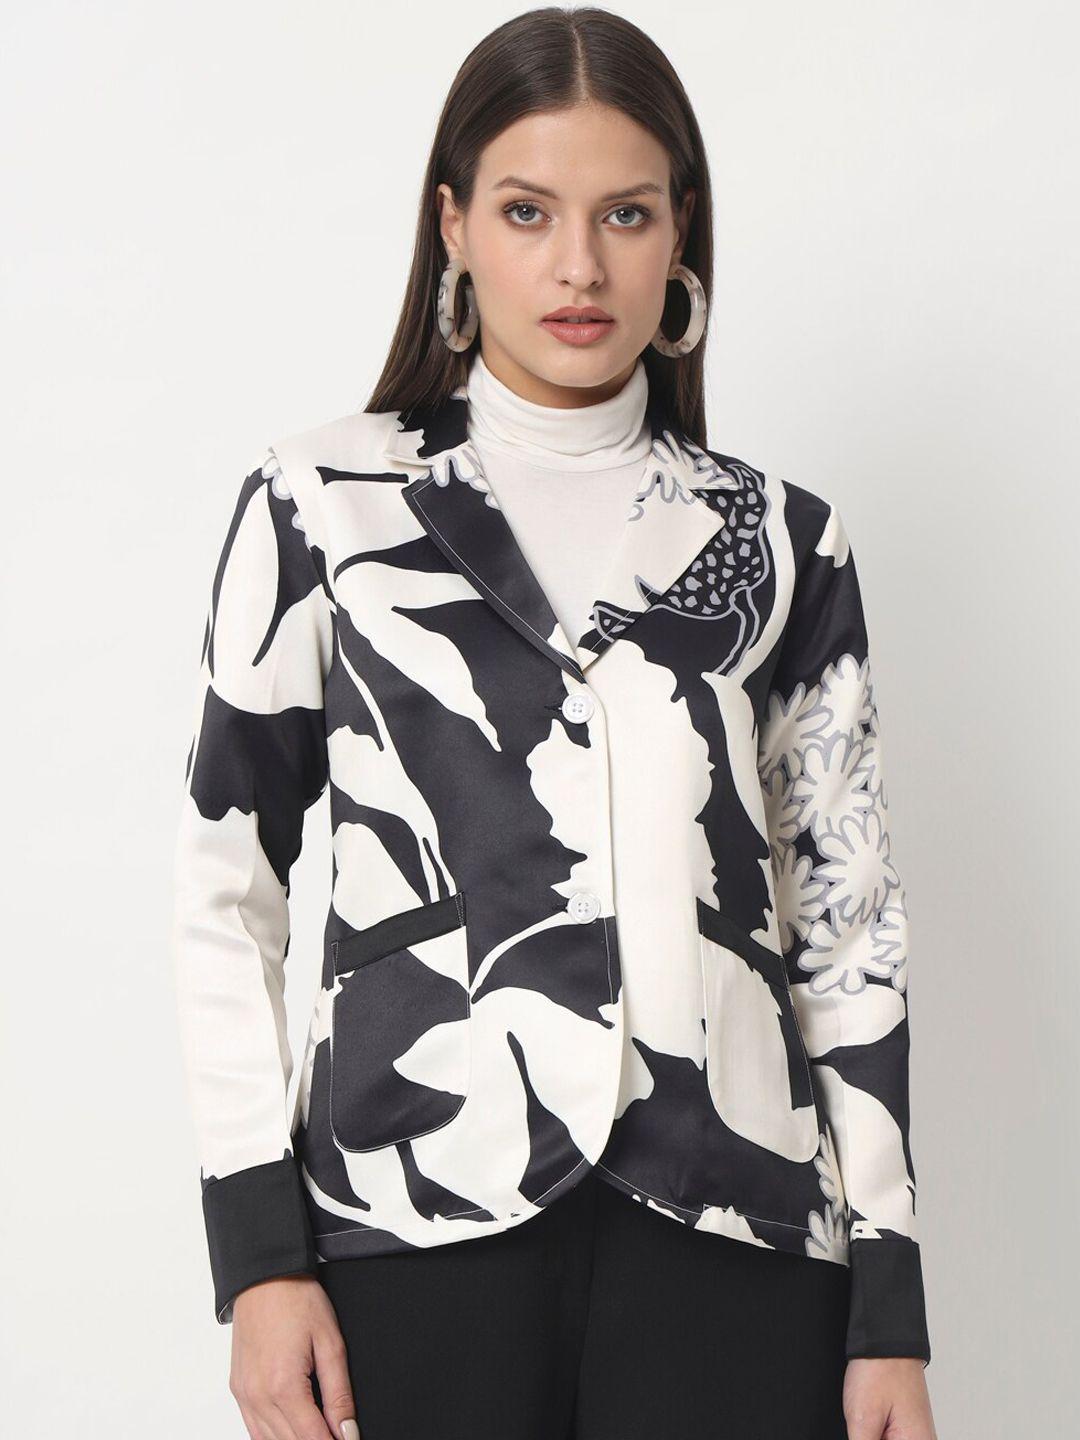 angloindu women black white lightweight fashion with patchwork jacket